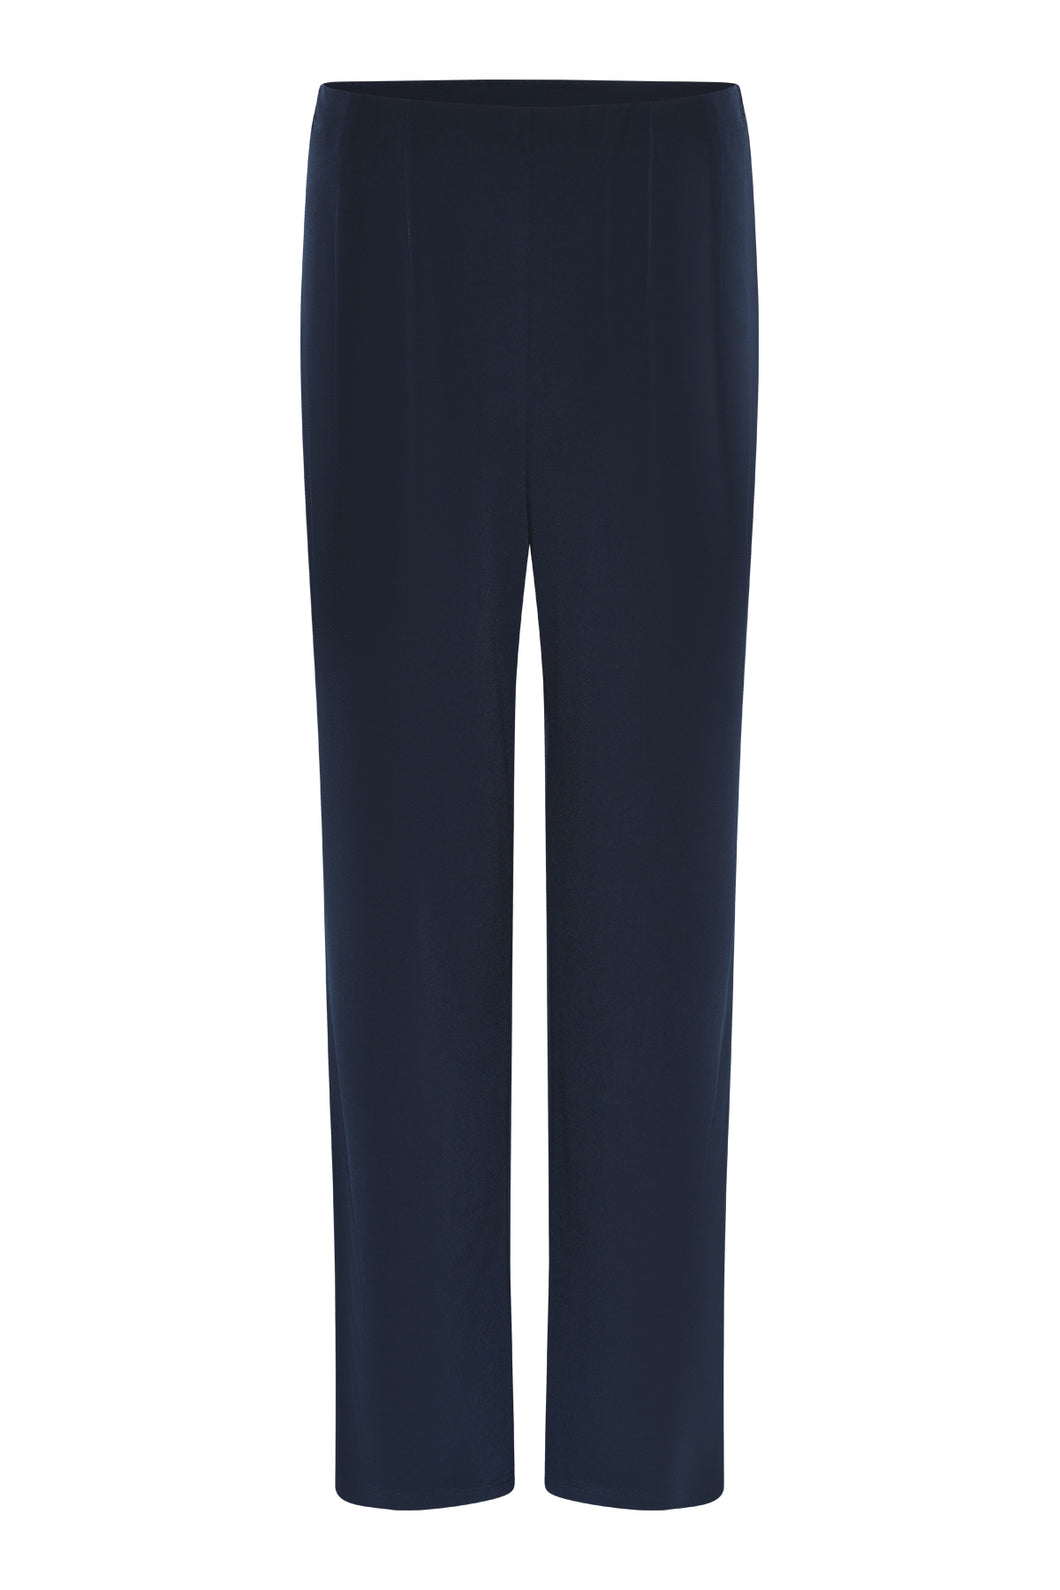 Tia - Straight leg Jersey trousers - Navy